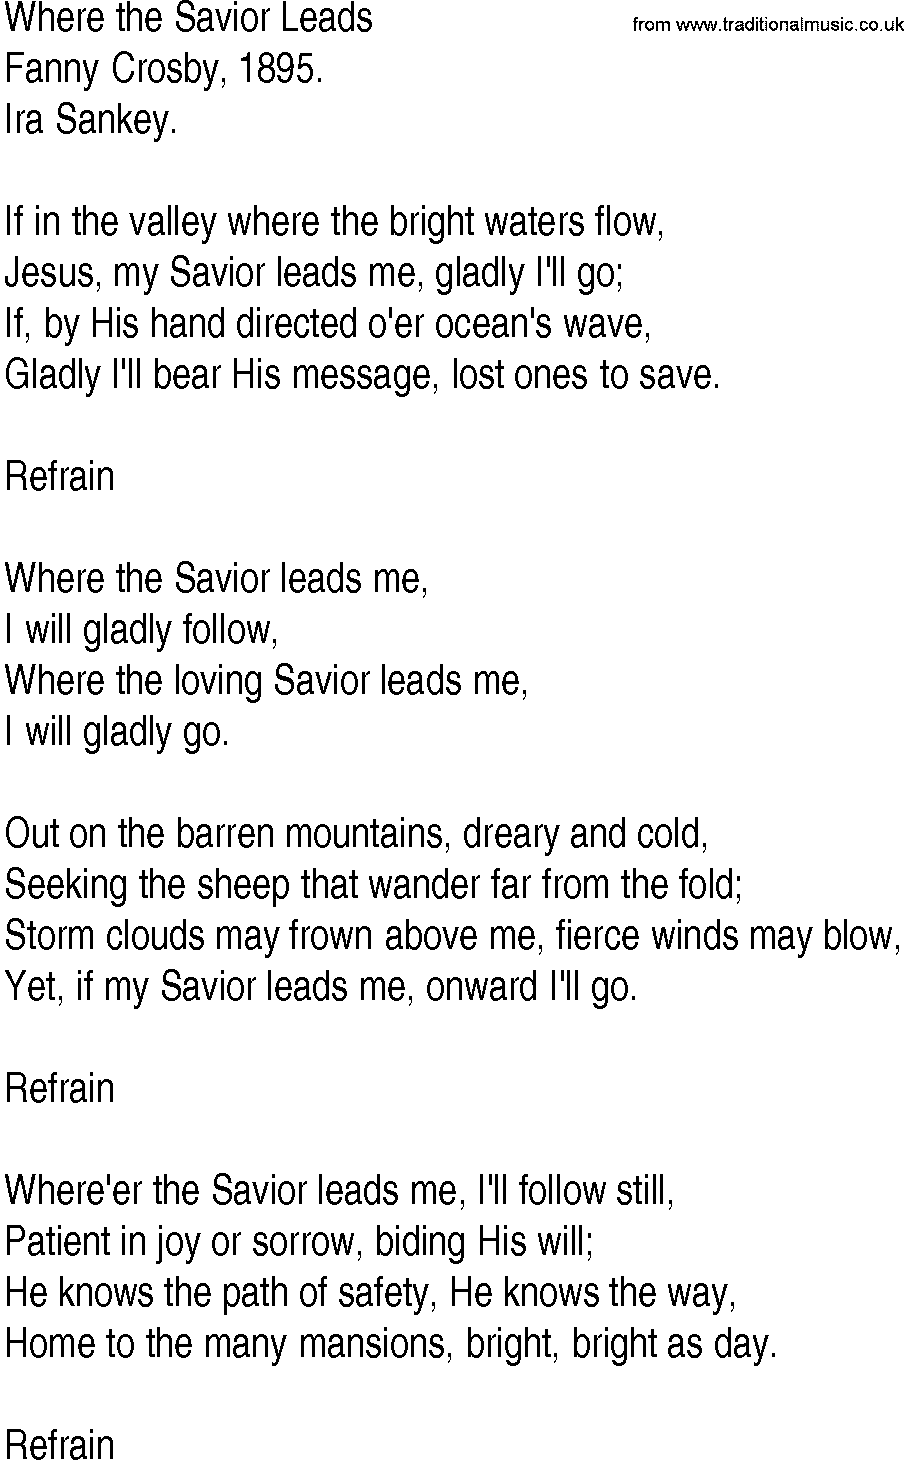 Hymn and Gospel Song: Where the Savior Leads by Fanny Crosby lyrics